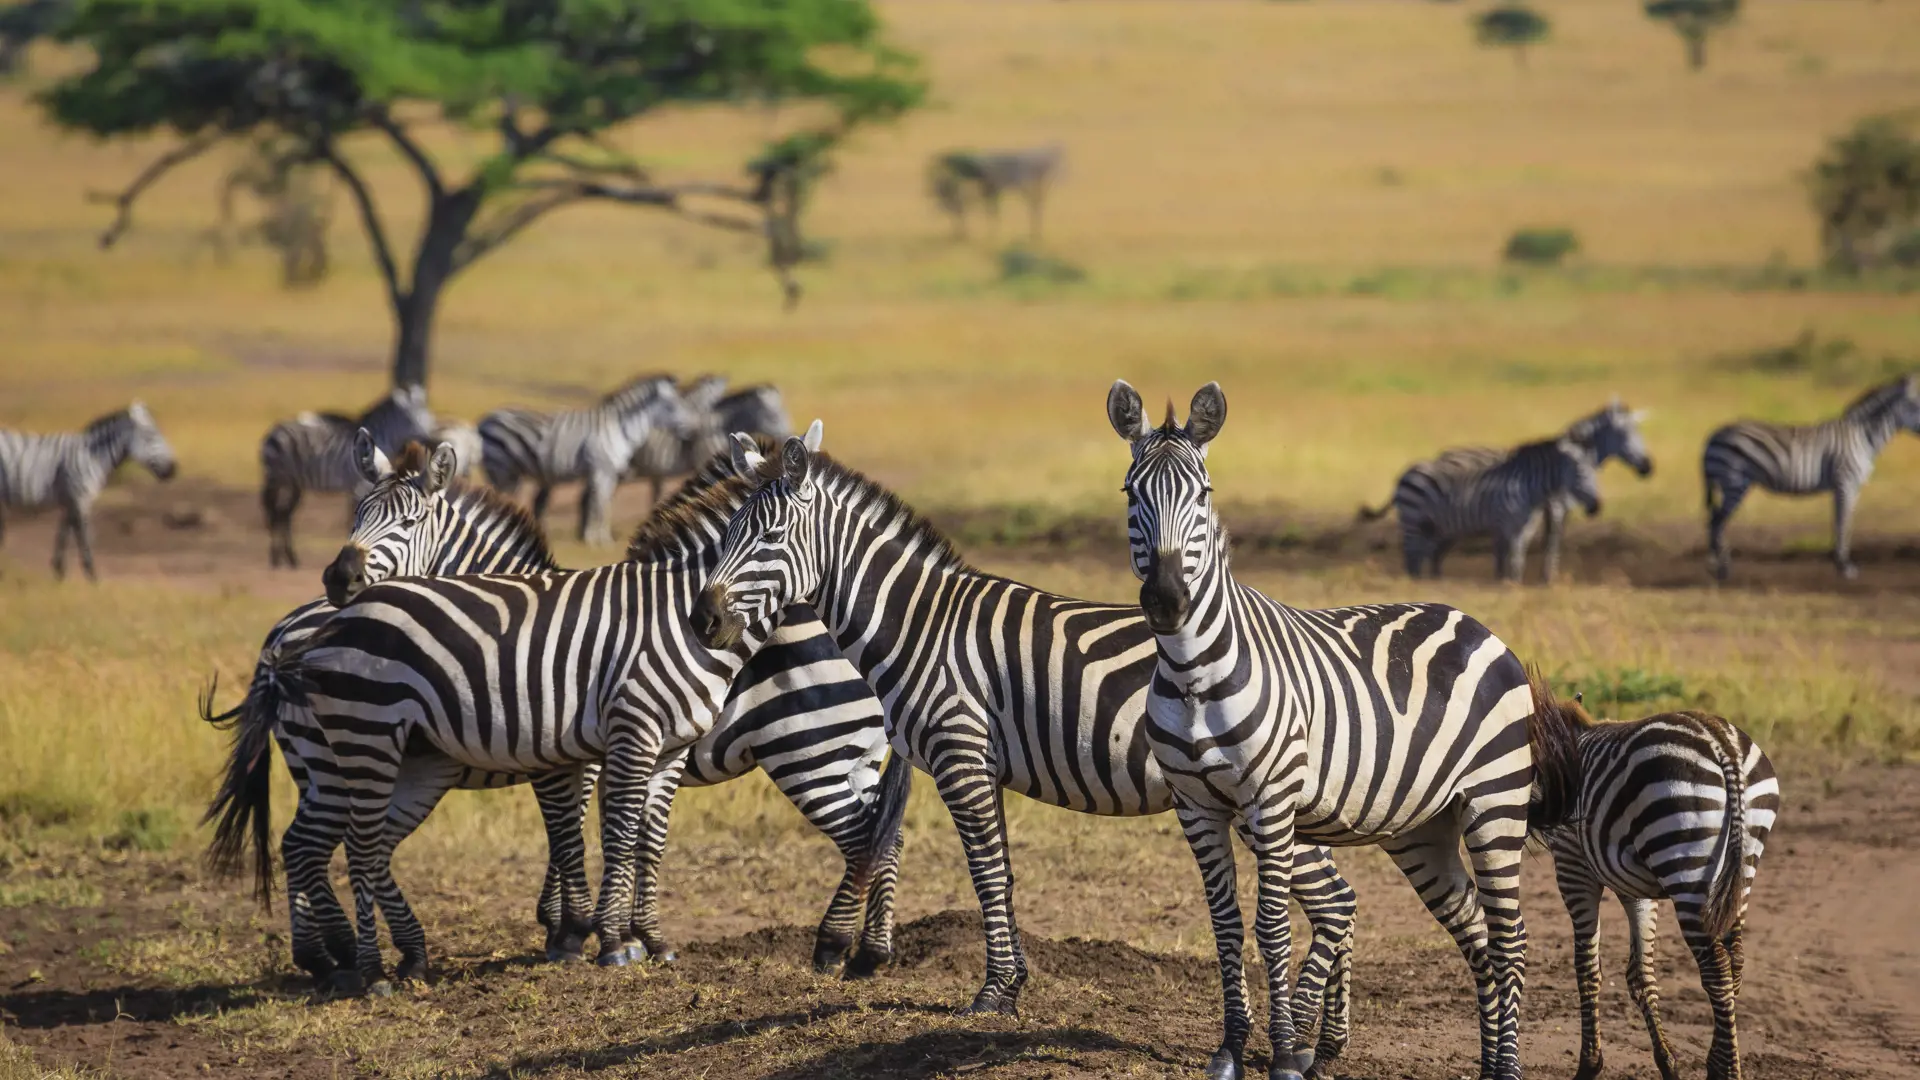 shutterstock_731633662 Zebras in Serengeti National park - Tanzania.jpg